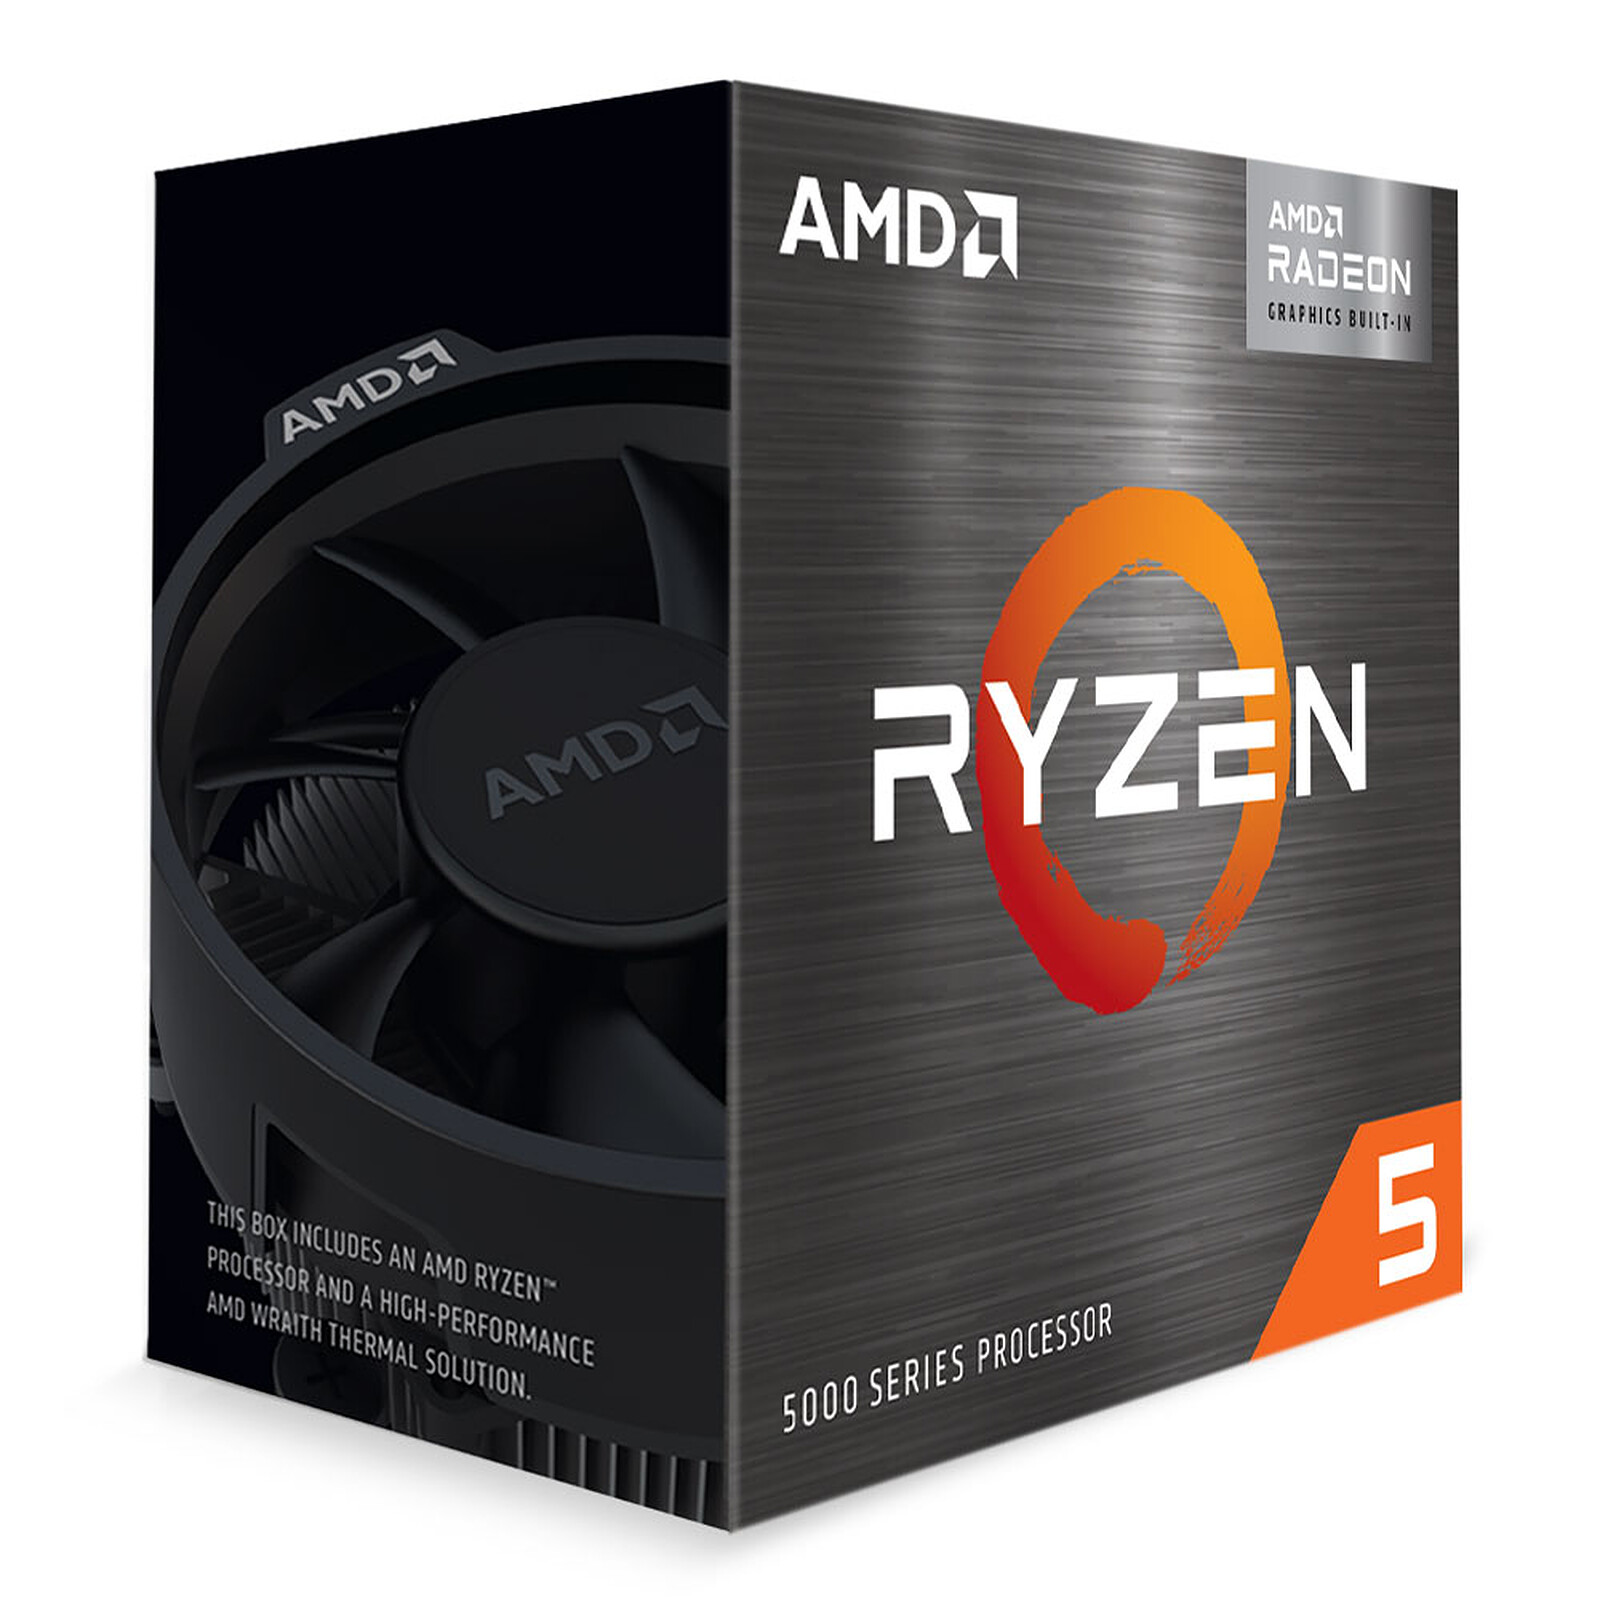 3,6 GHz MPK Version OEM Sans iGPU Processeur AMD Ryzen 5 3600 Pro Socket AM4 